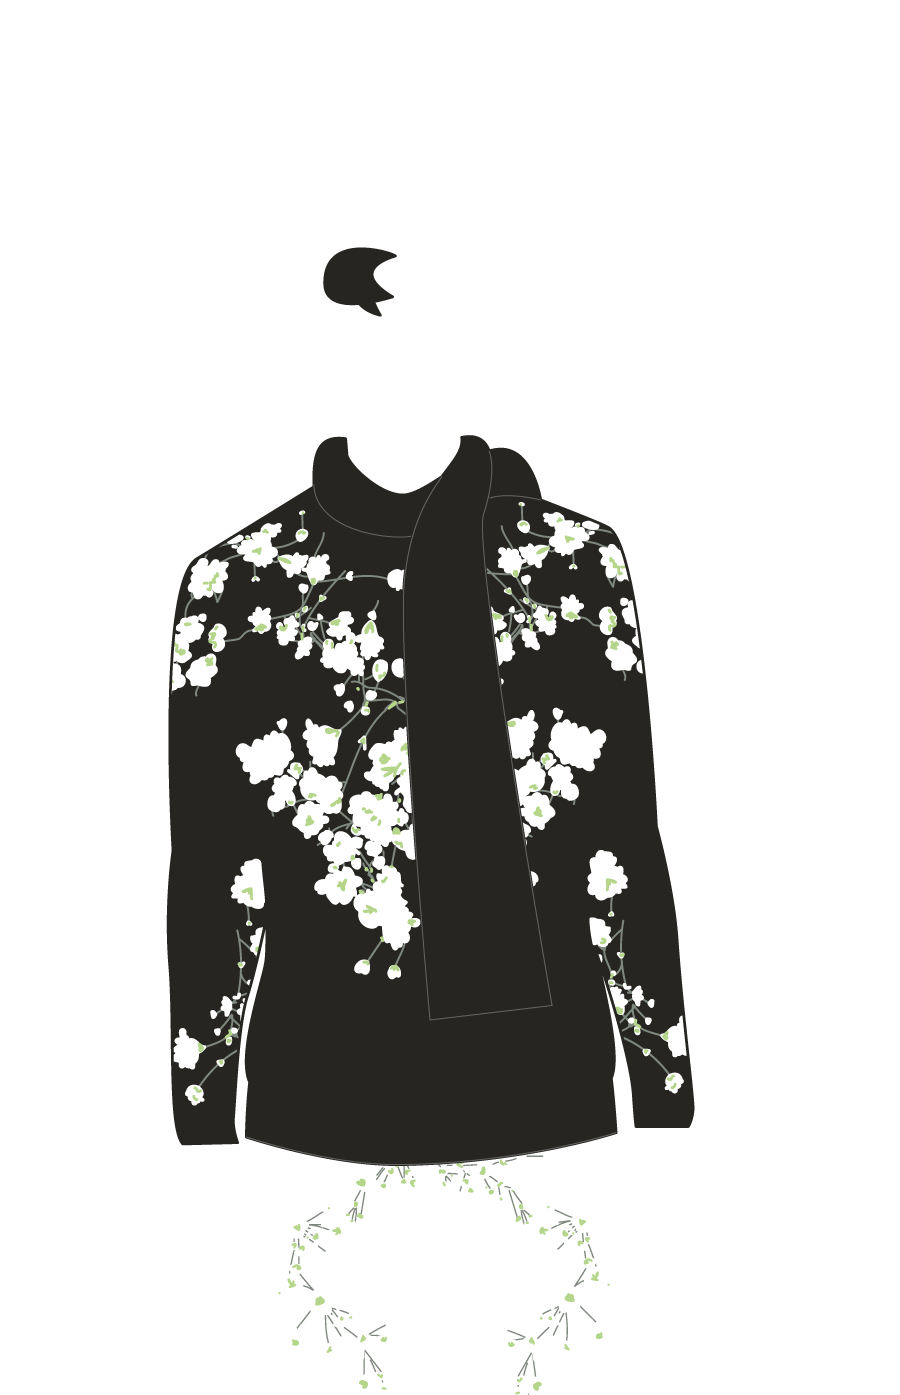 black sweater with symmetric flowers design